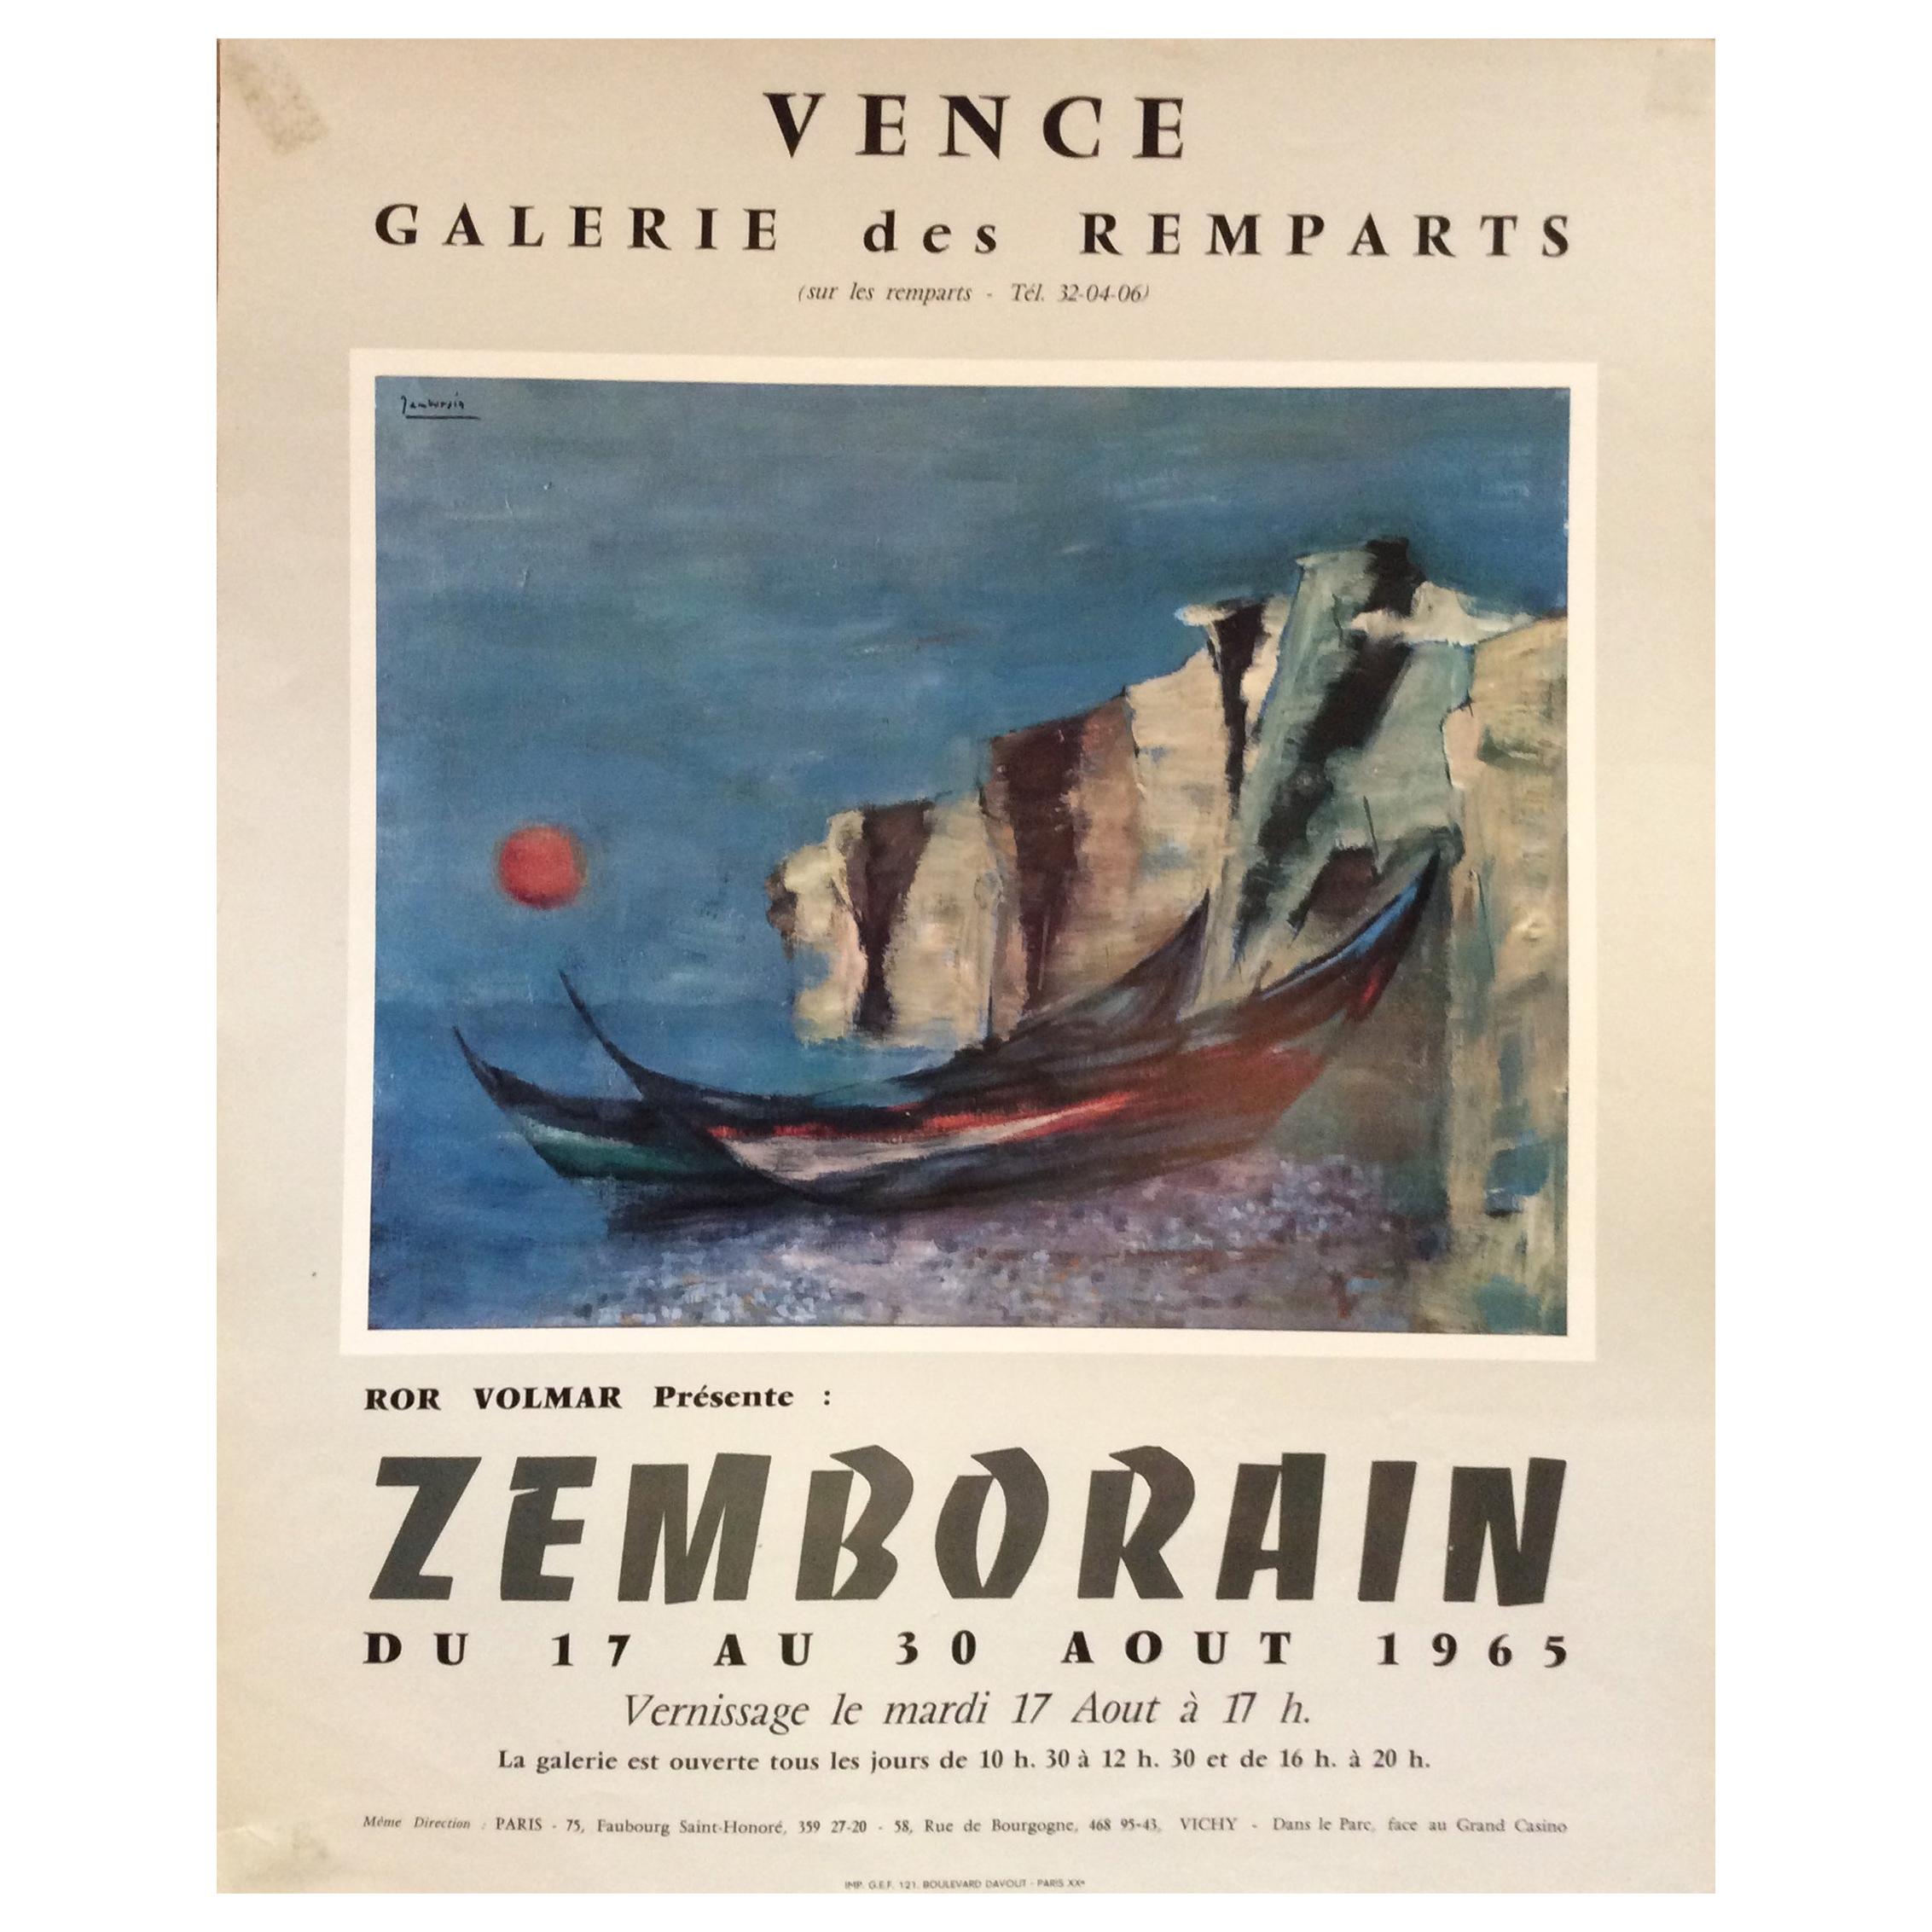 Original Midcentury French Seacaspe Art Exhibit Poster by Zemborain, dated 1965